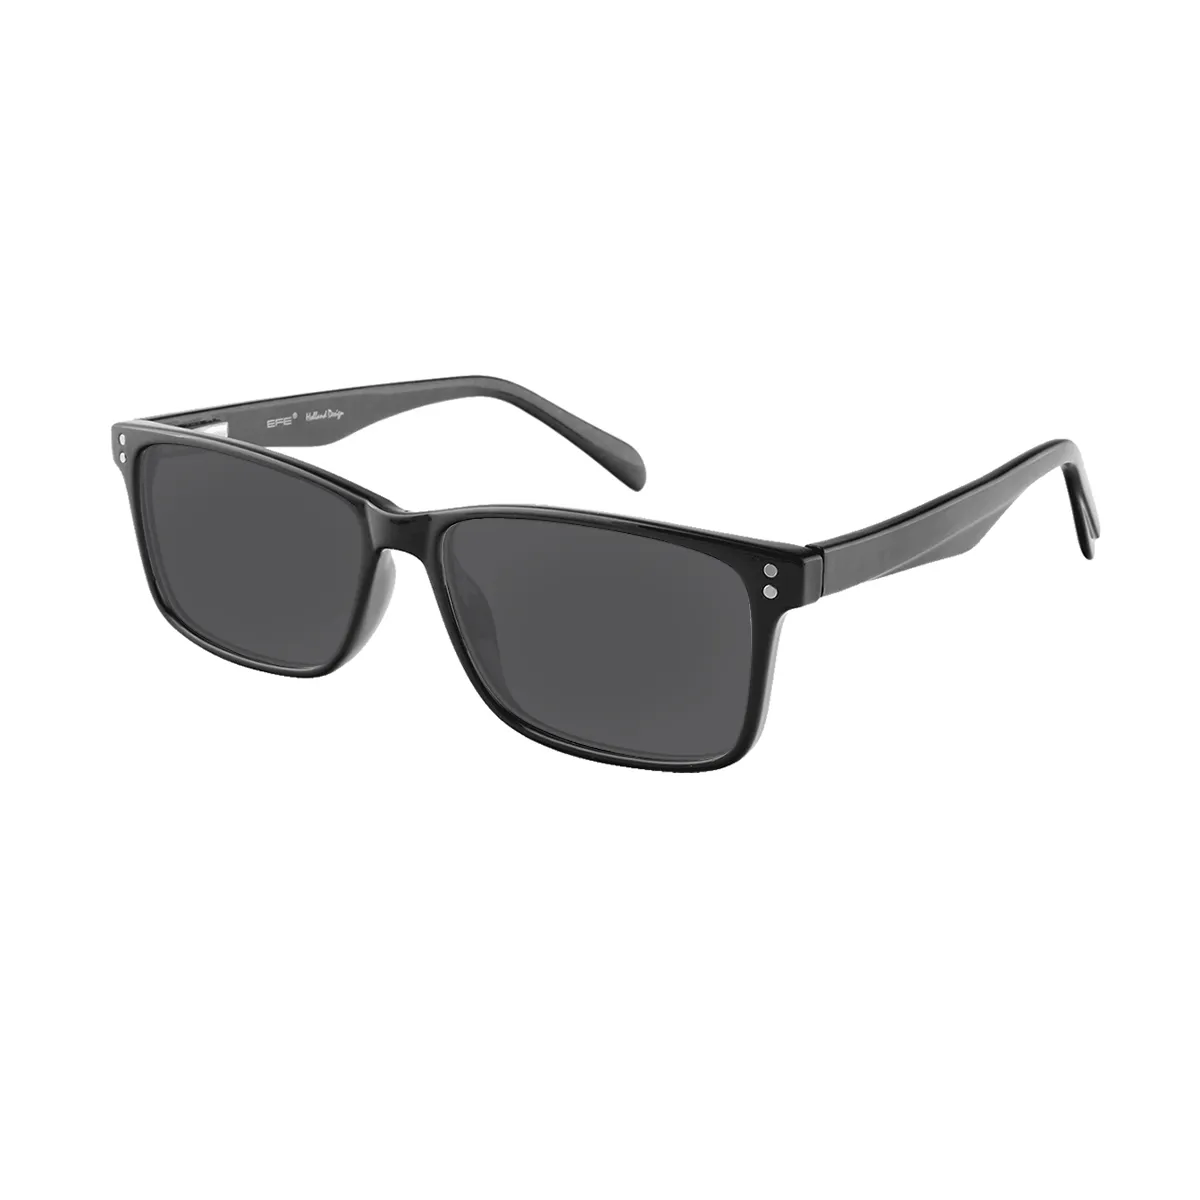 Pettit - Rectangle Black Sunglasses for Men & Women